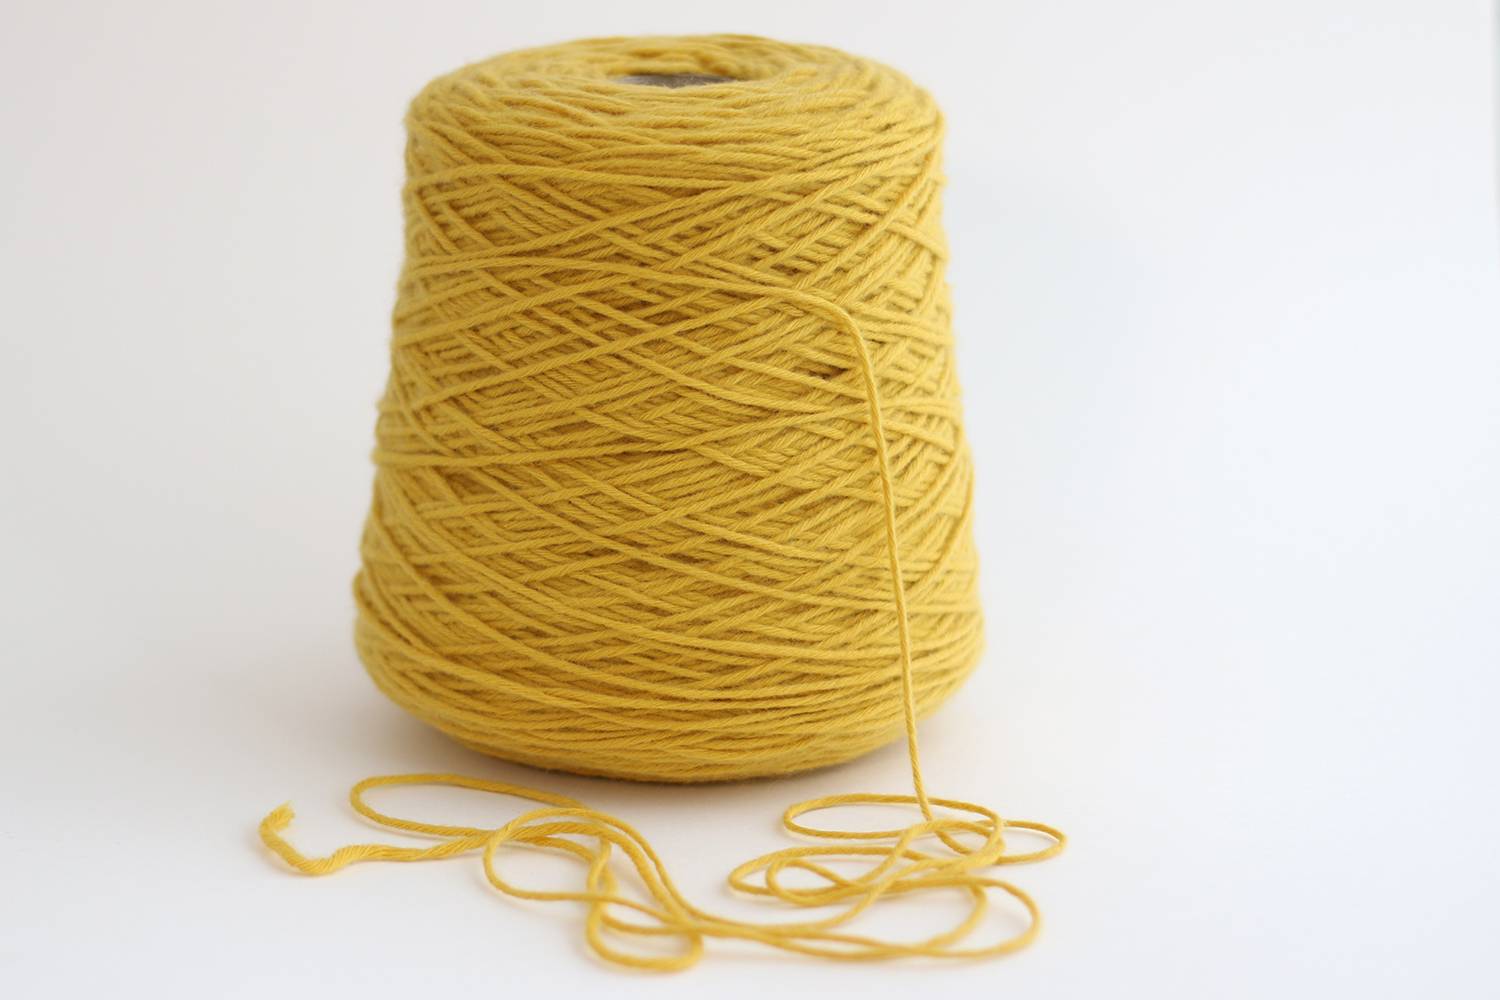 knitting needles - woolinspires